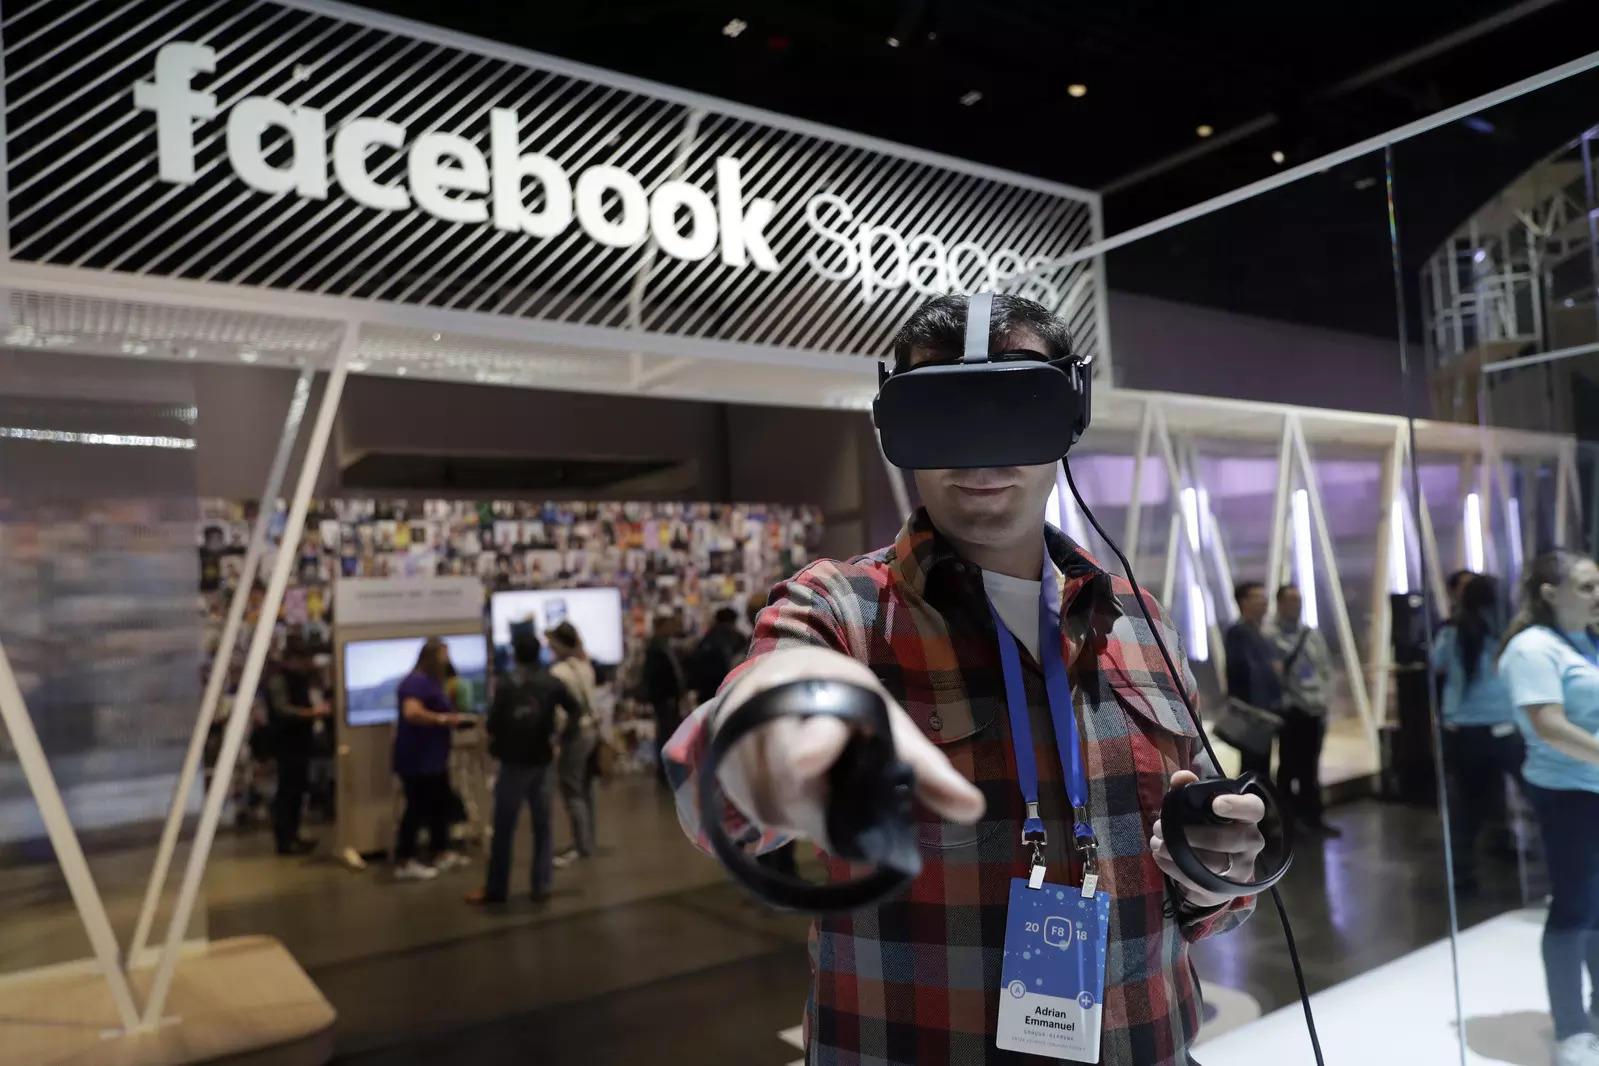 Facebook Oculus VR: Facebook Oculus VR device arriving in South Korea on Tuesday - Latest News